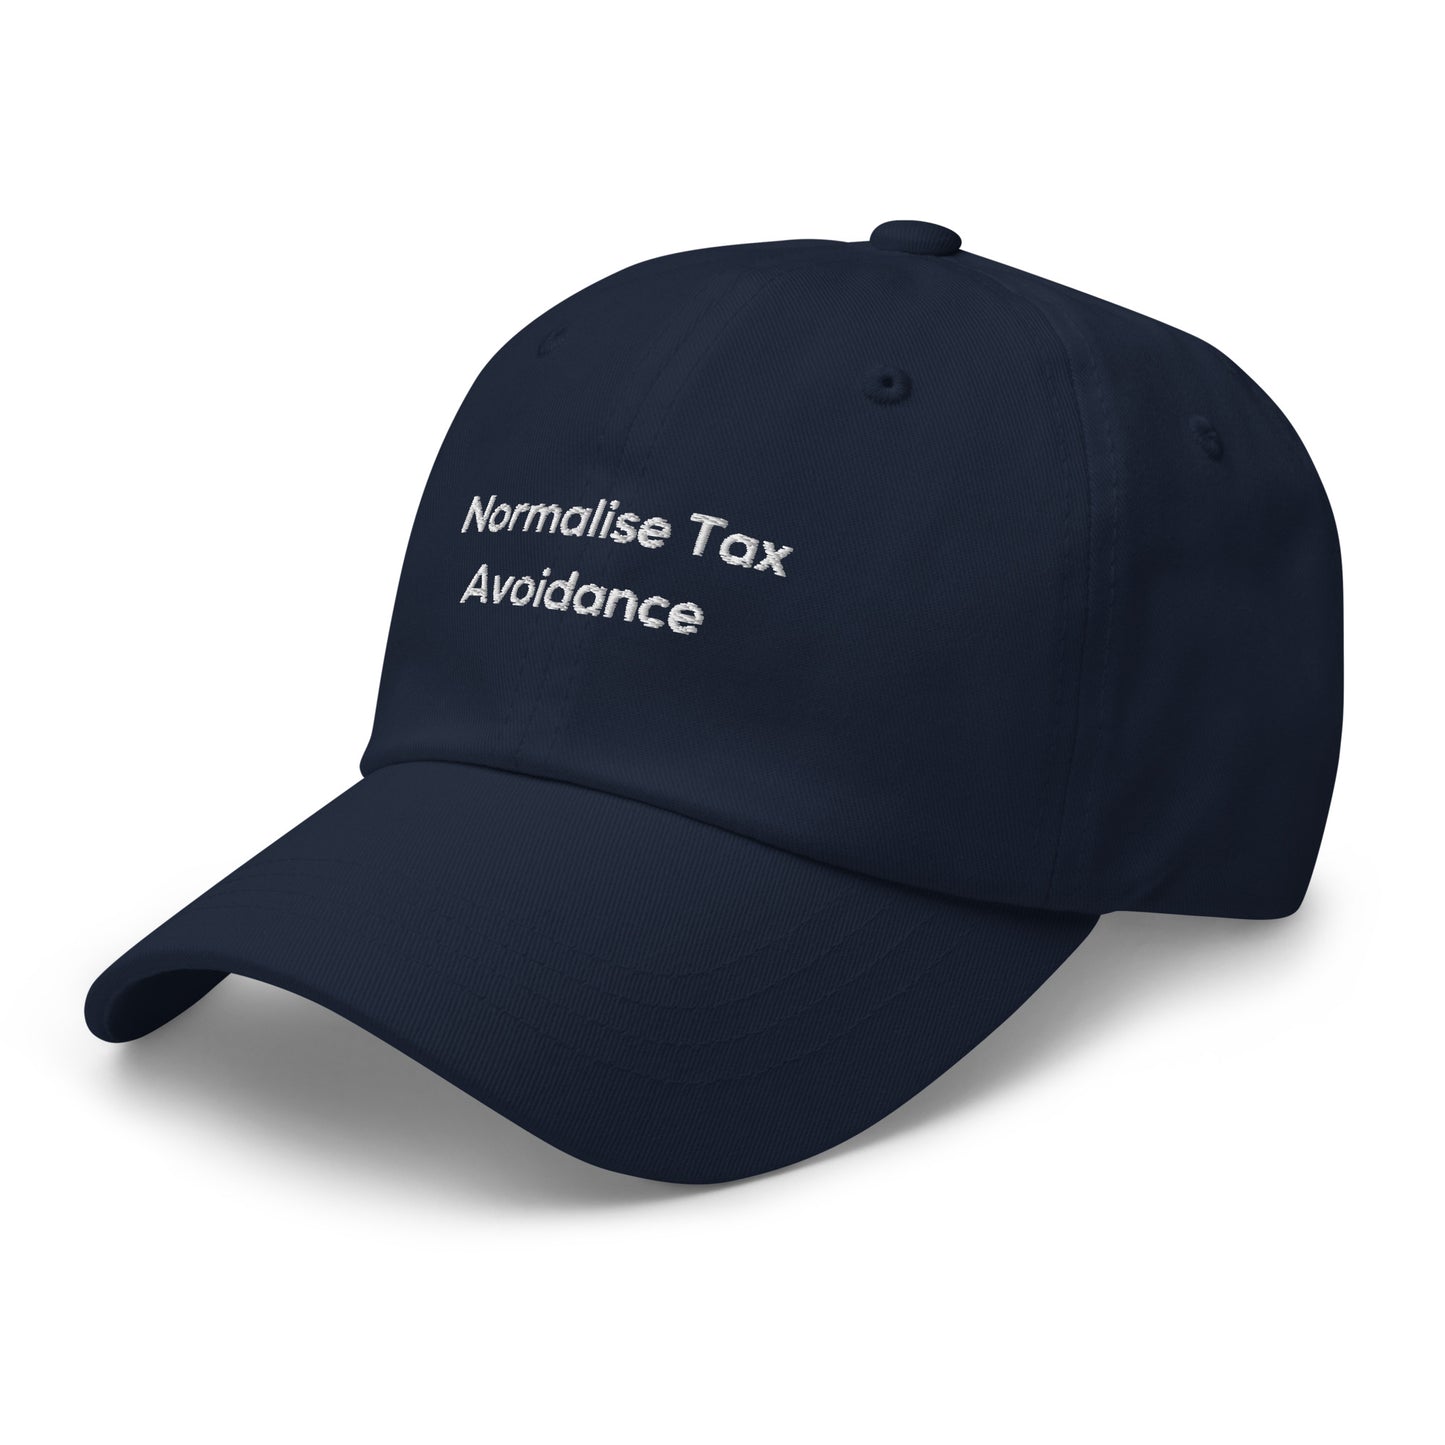 Tax Avoidance Cap